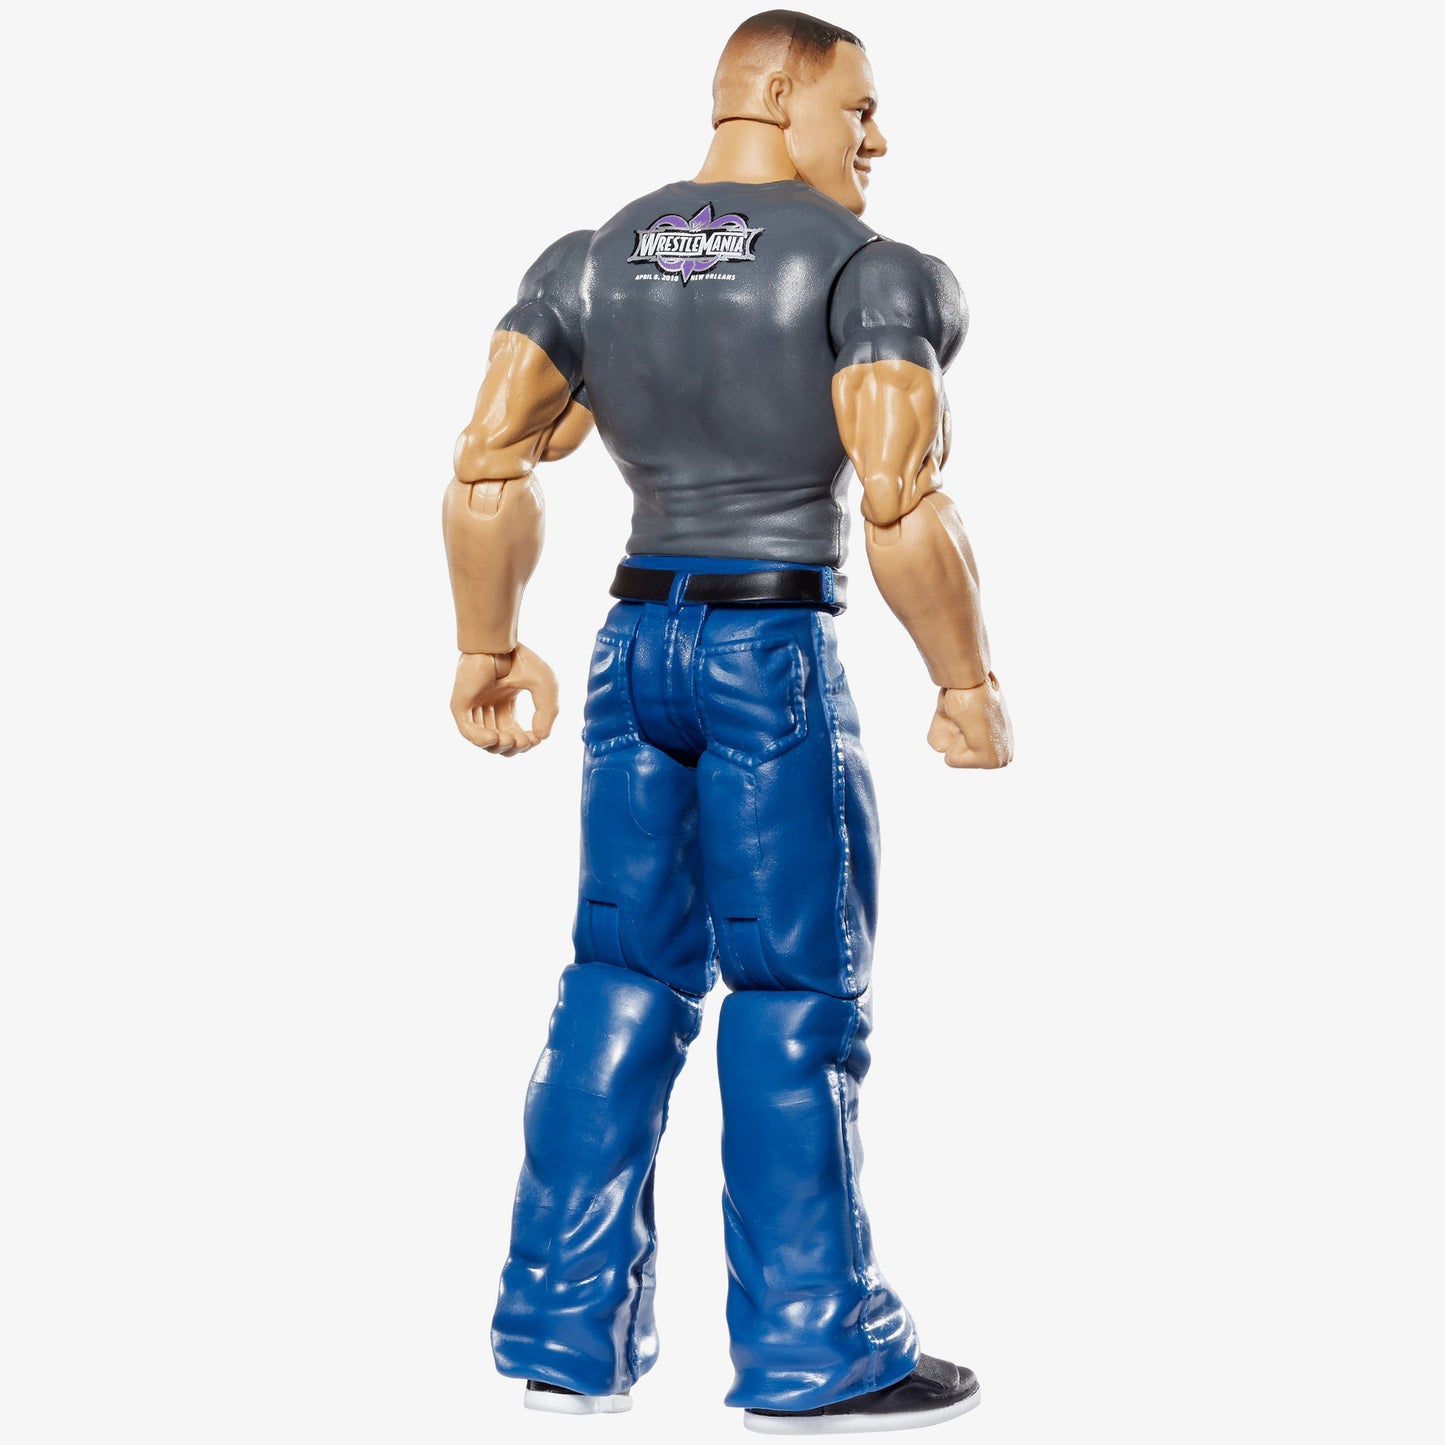 John Cena - WWE WrestleMania 35 Basic Series